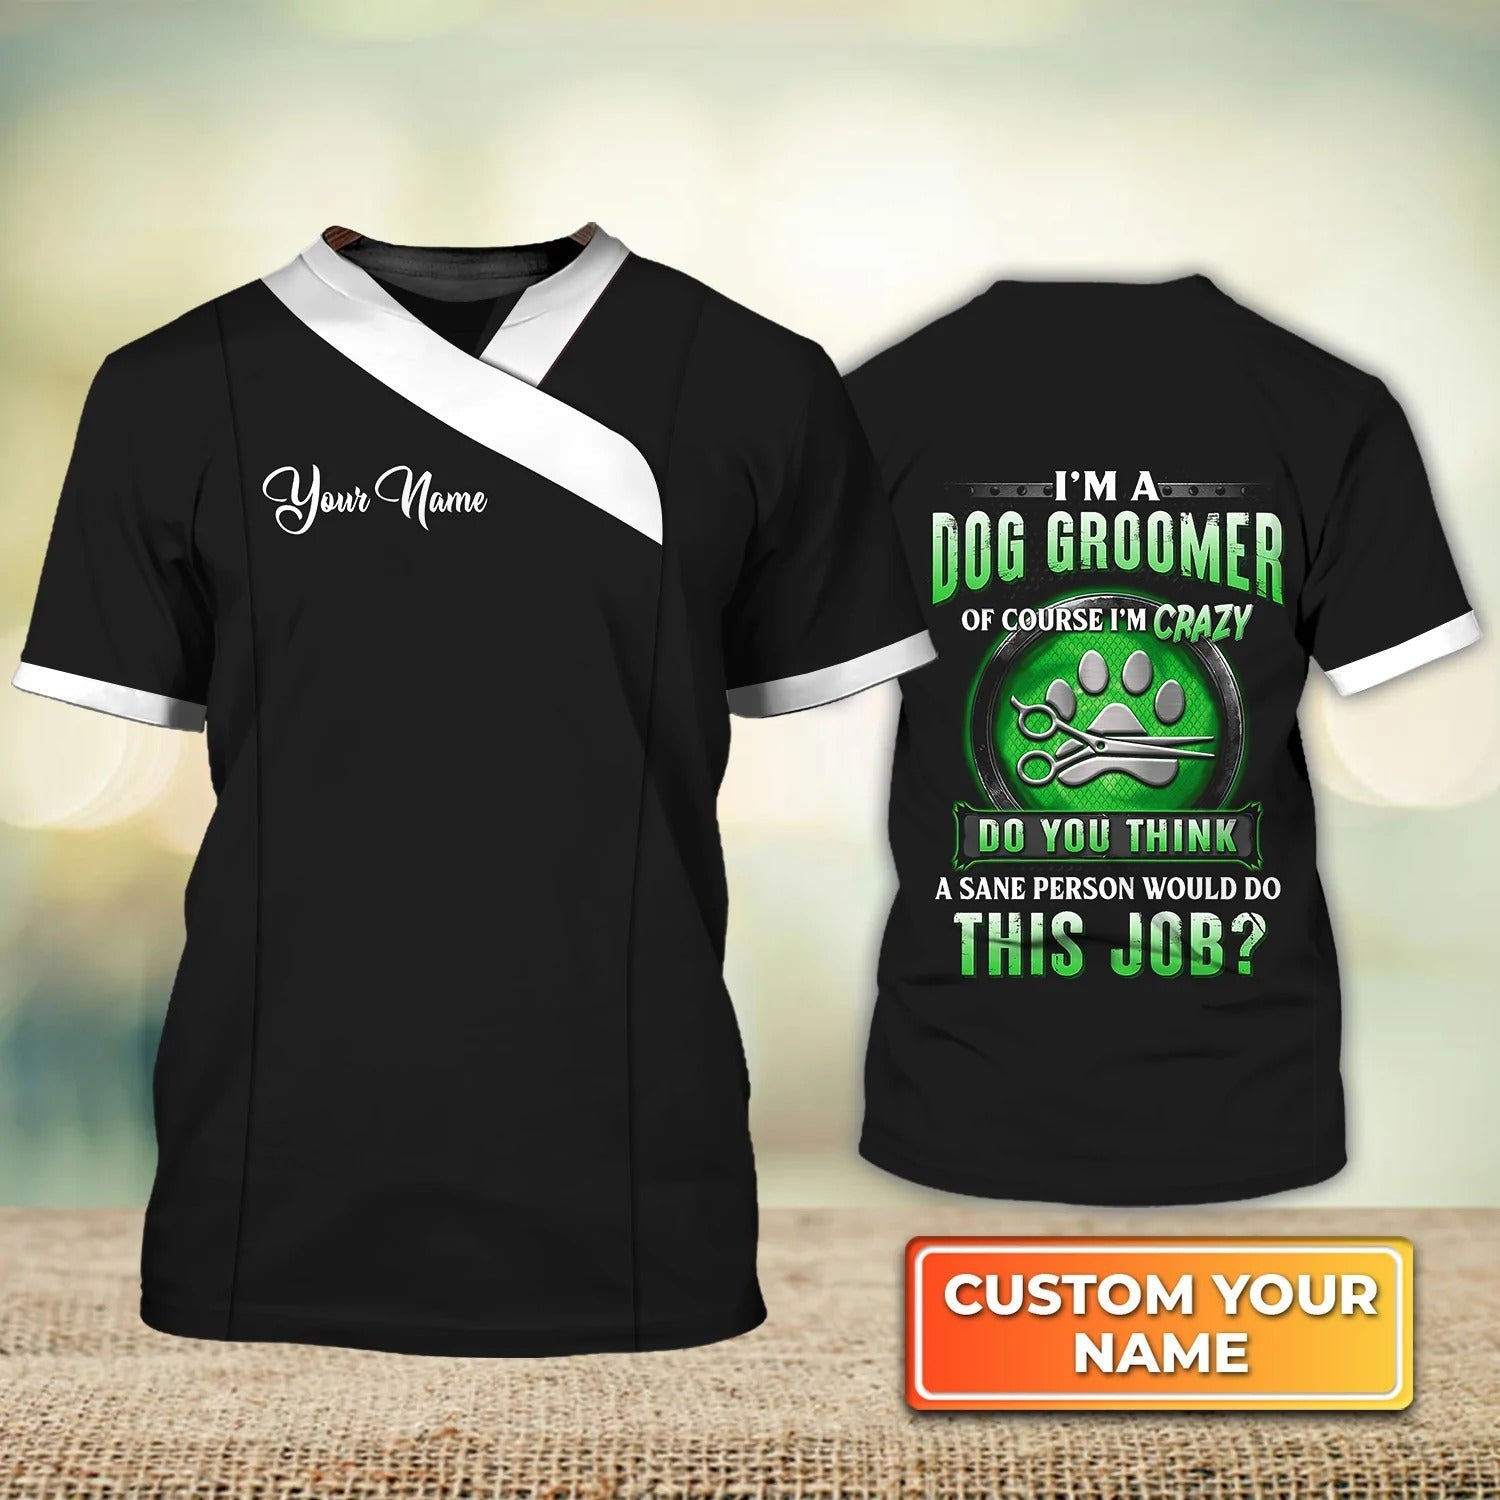 Personalized Groomer Dog Shirt Men Women Custom Dog Groomer 3D T Shirt Men Women Paw Dog Groomer Pet Groomer Uniform Pink Salon